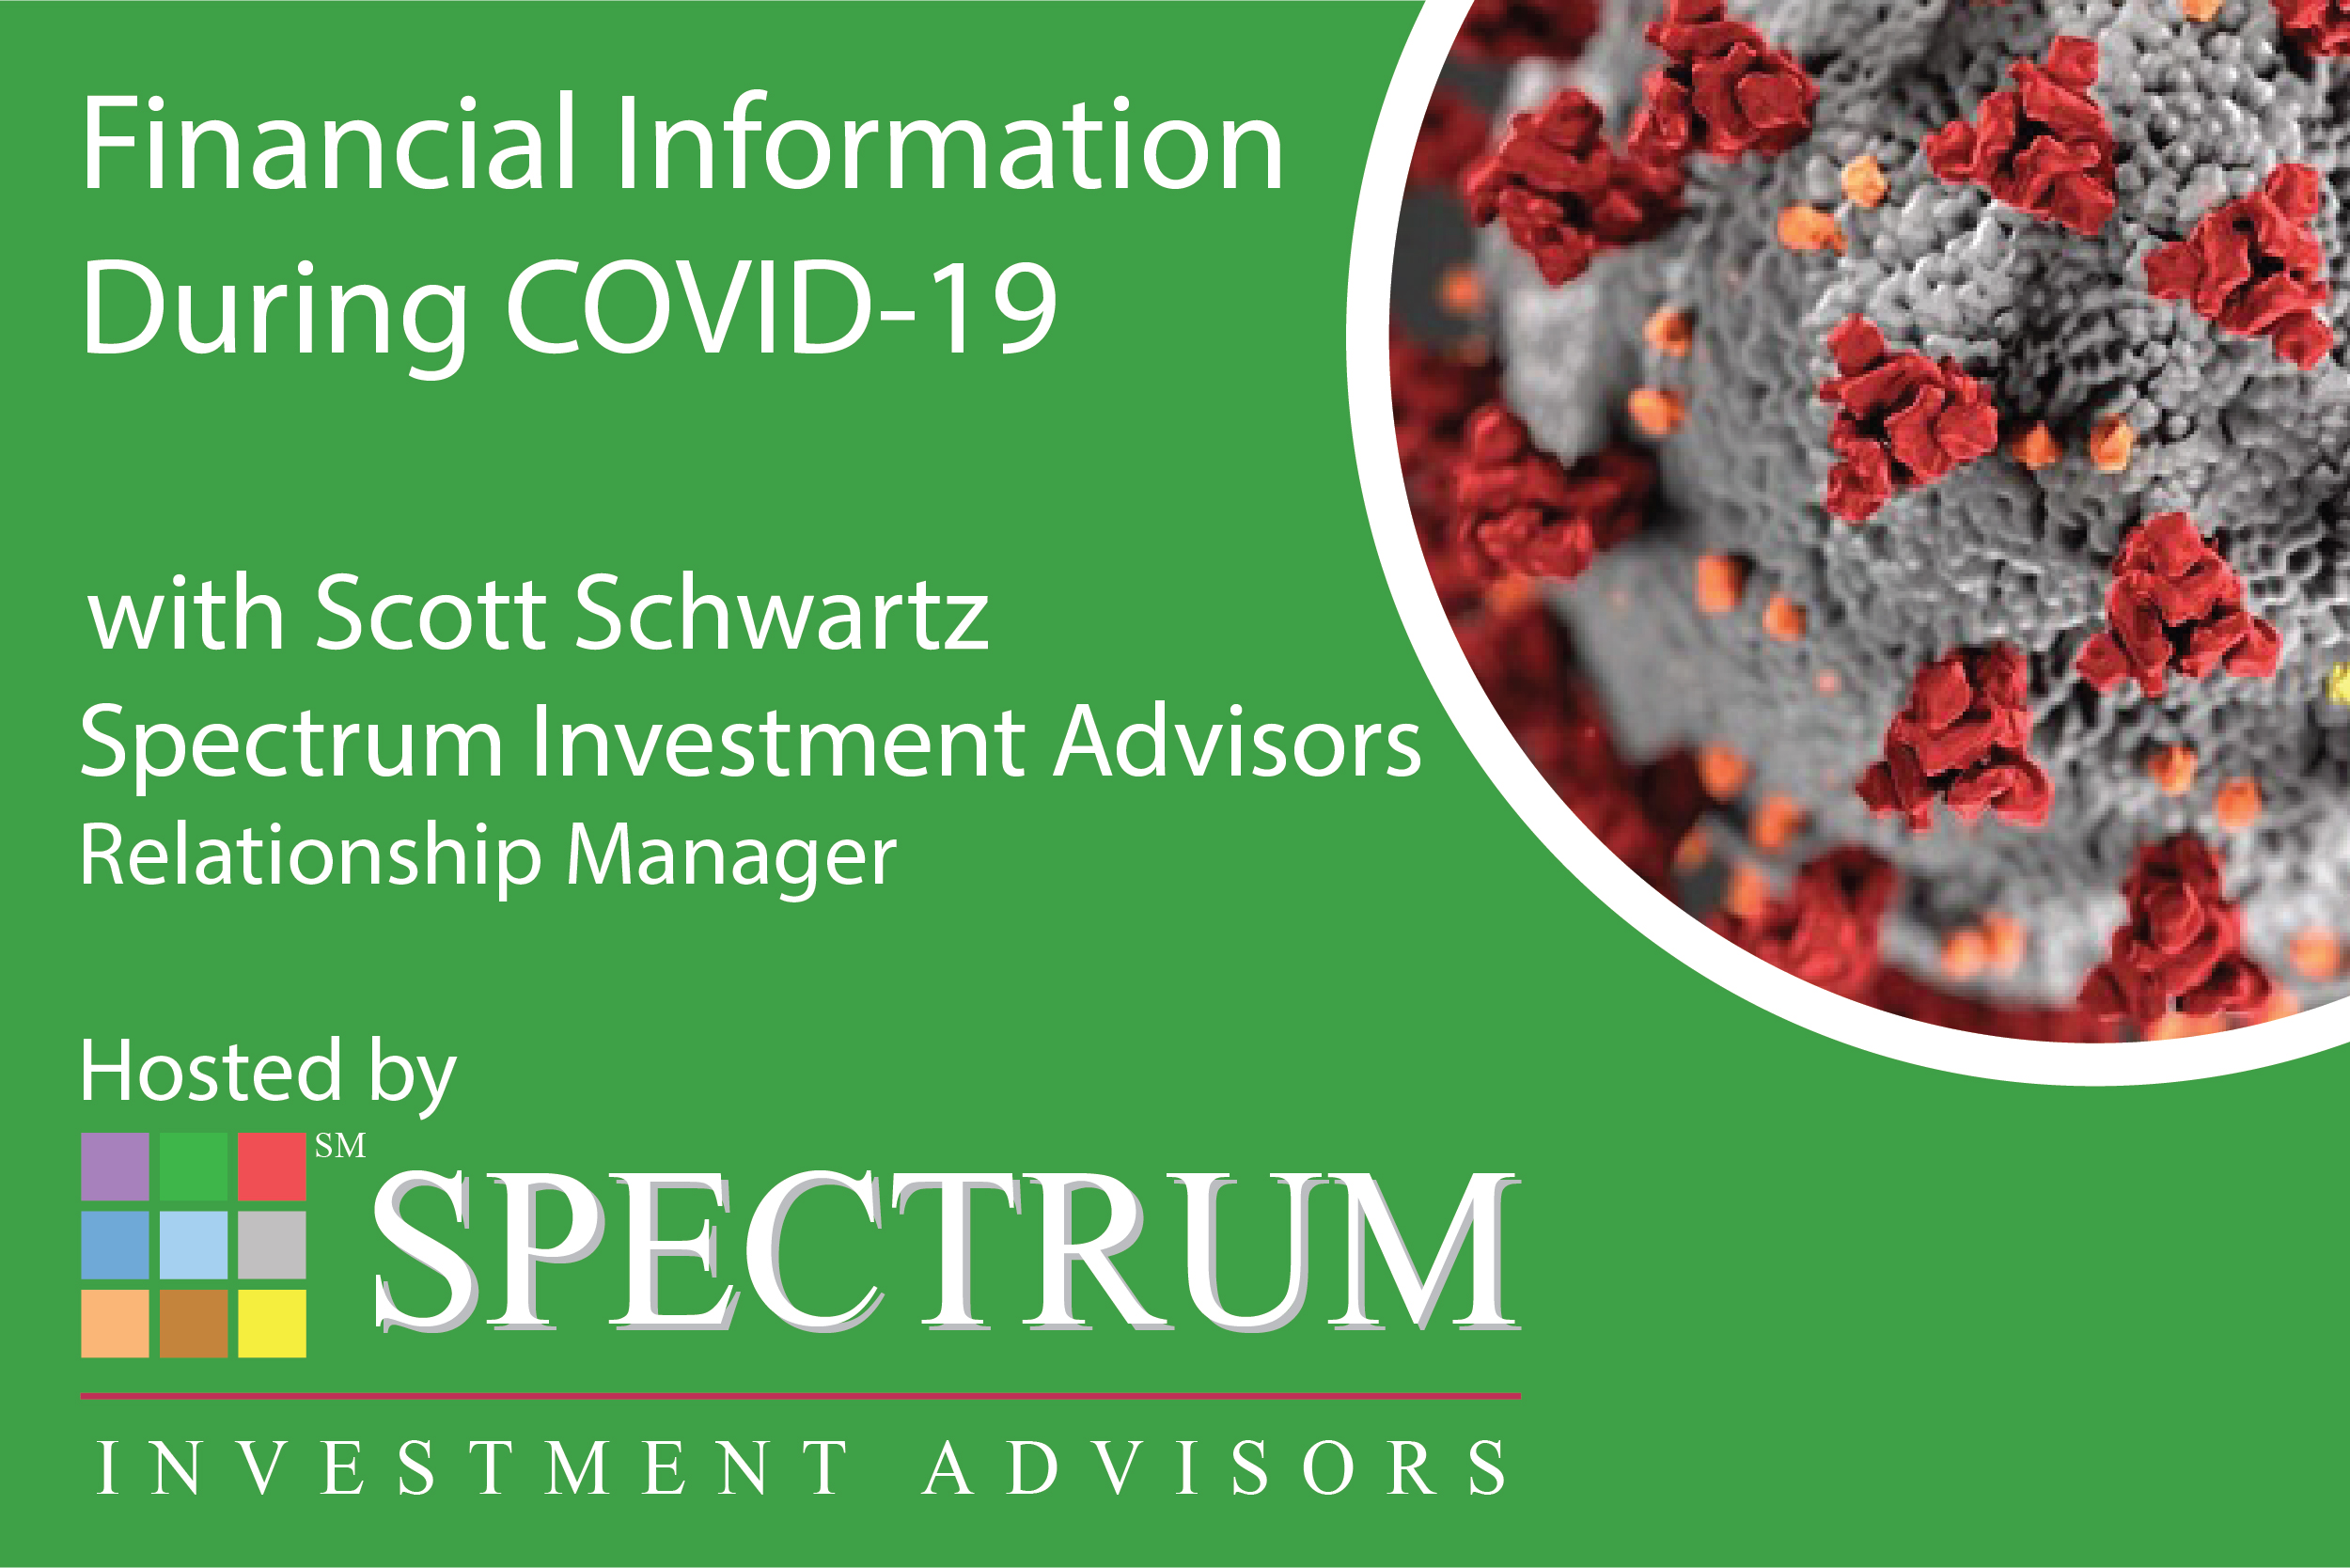 SIA Website Scott Schwartz Financial Information During COVID-19 Replay Image (Green) (RGB)-01